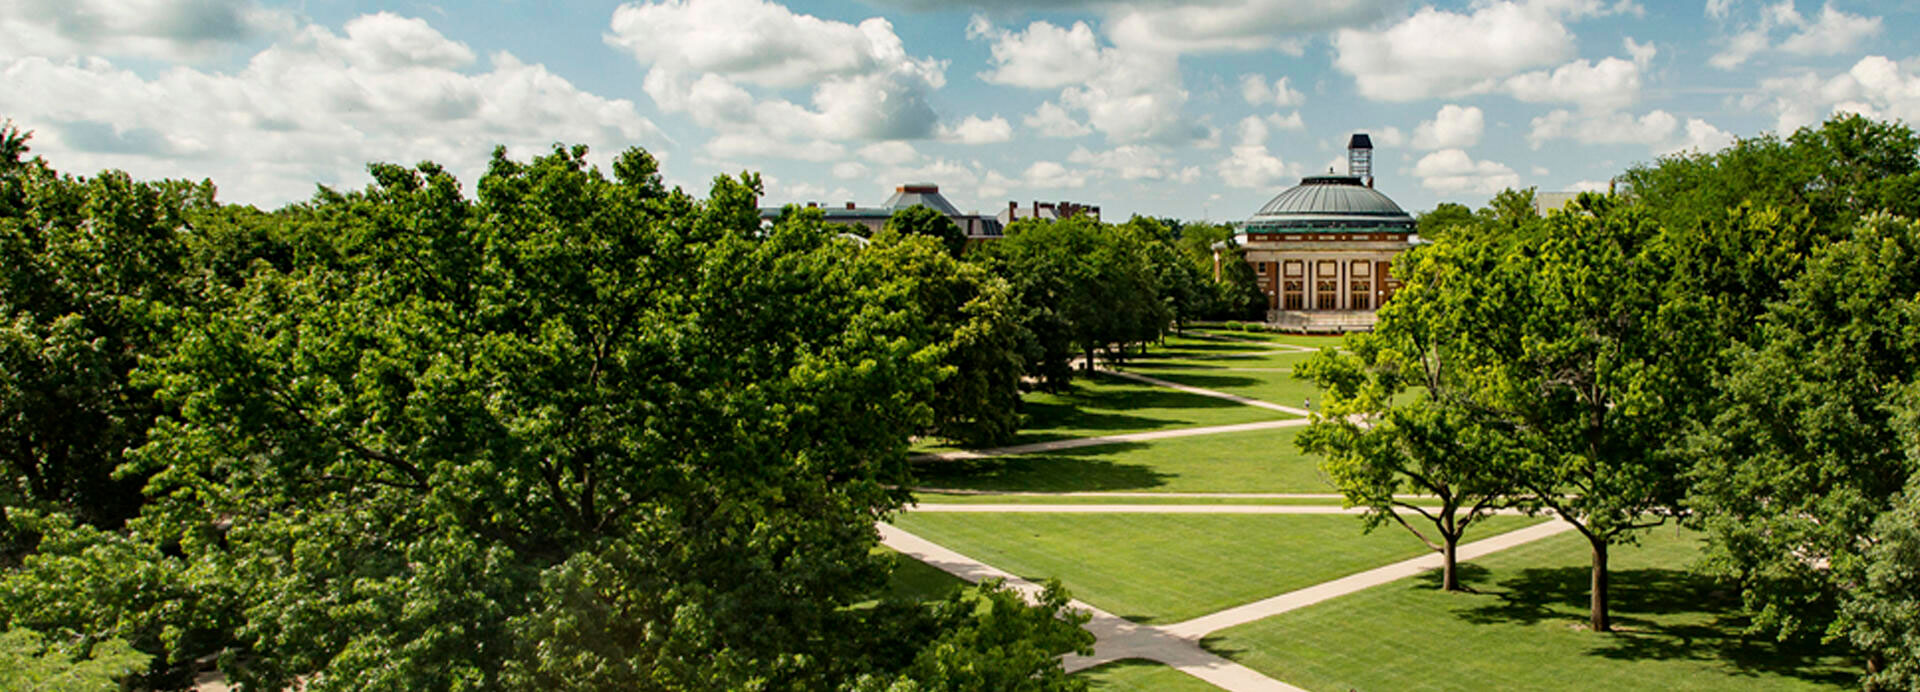 Aerial view of the University of Illinois quad